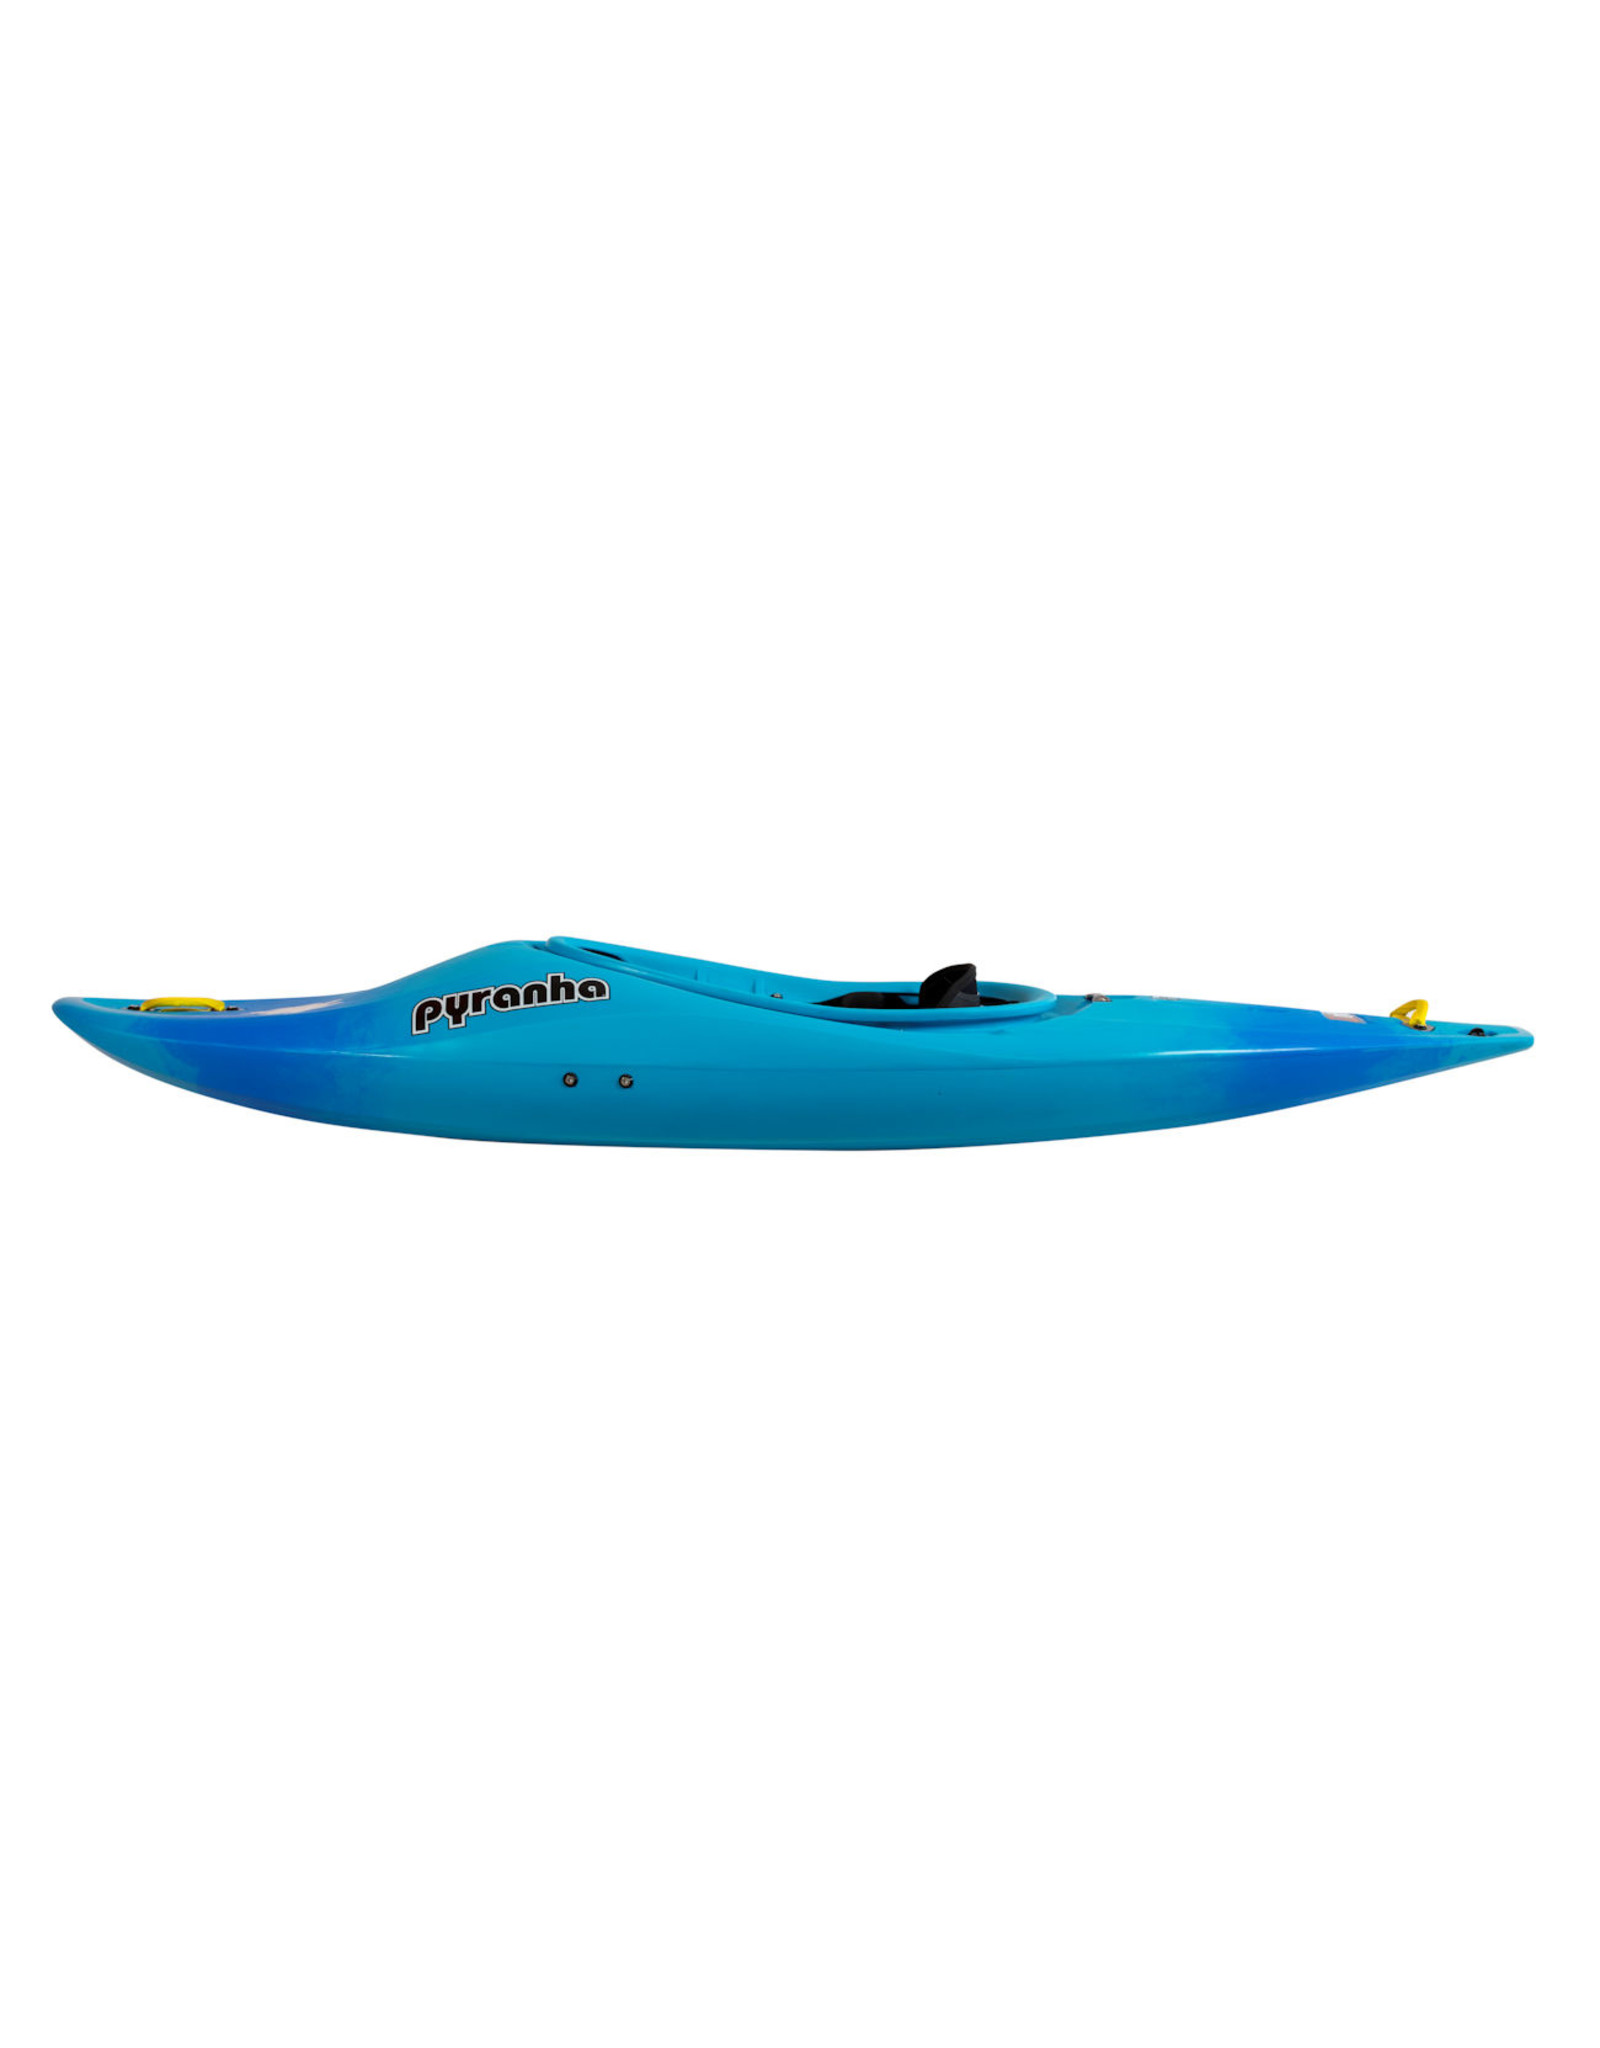 Pyranha Pyranha Kayak Rebel - Discontinued Color